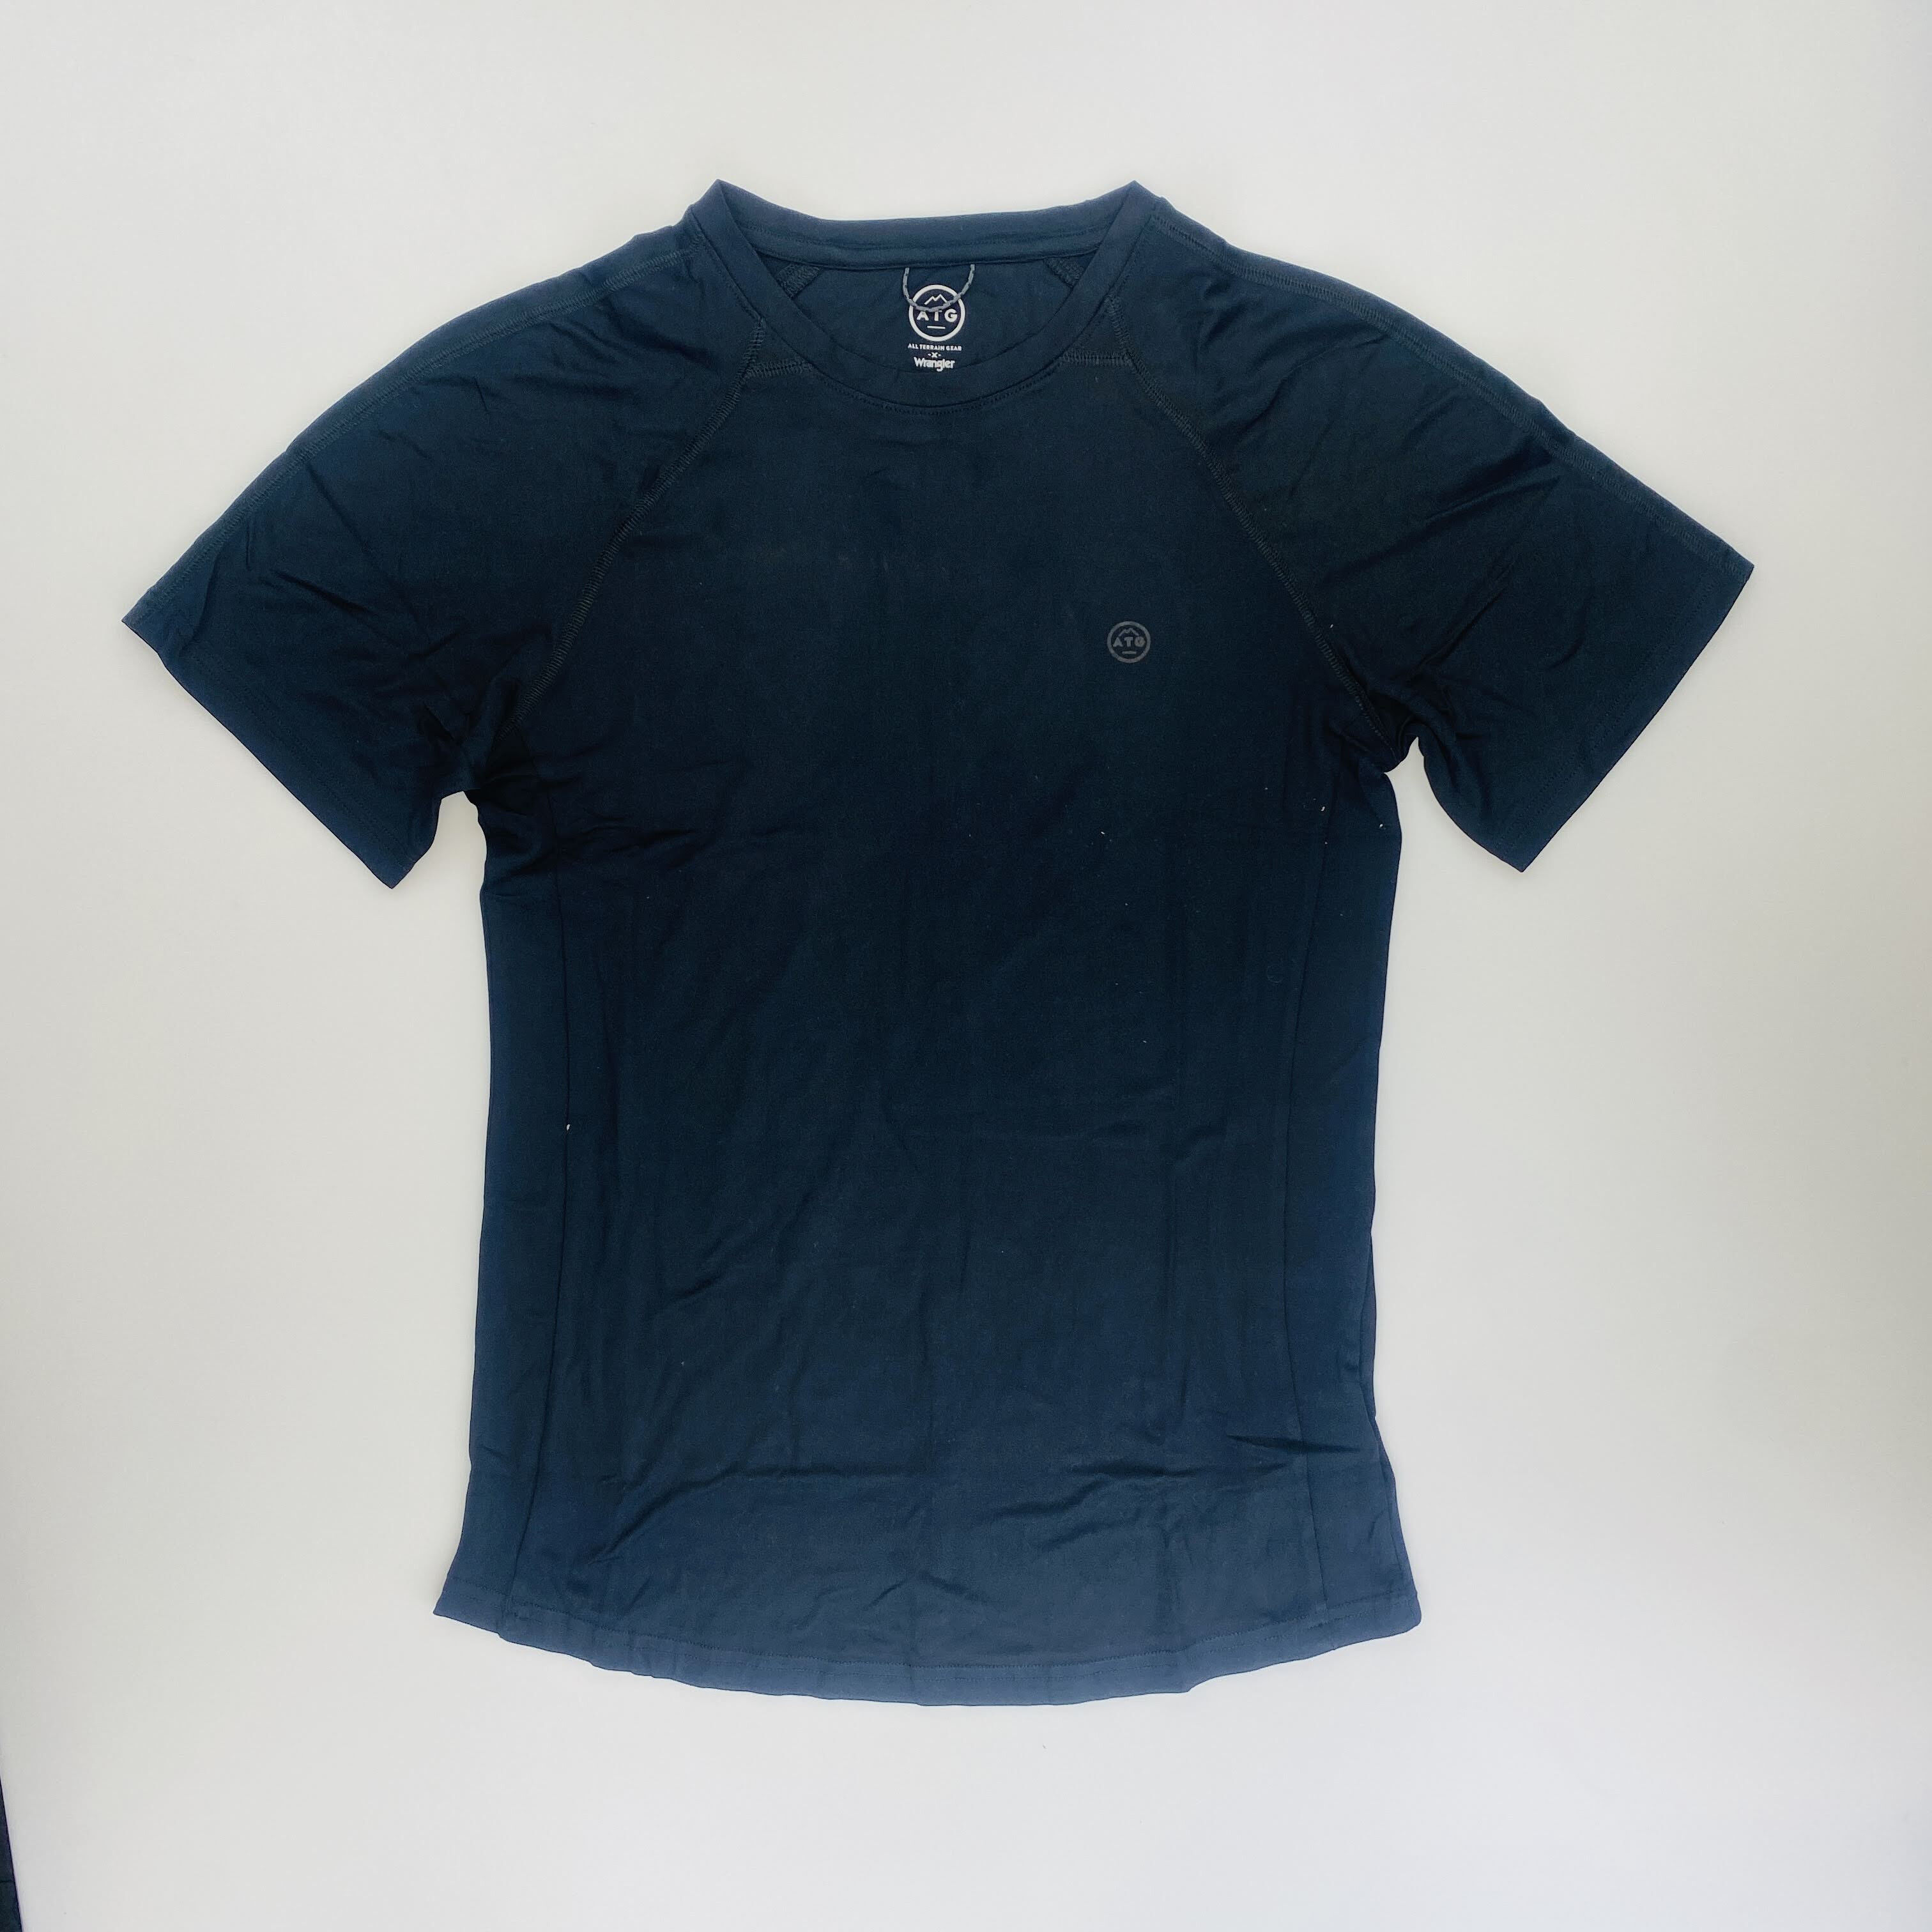 Wrangler Ss Performance T Shirt - Seconde main T-shirt femme - Noir - XS | Hardloop